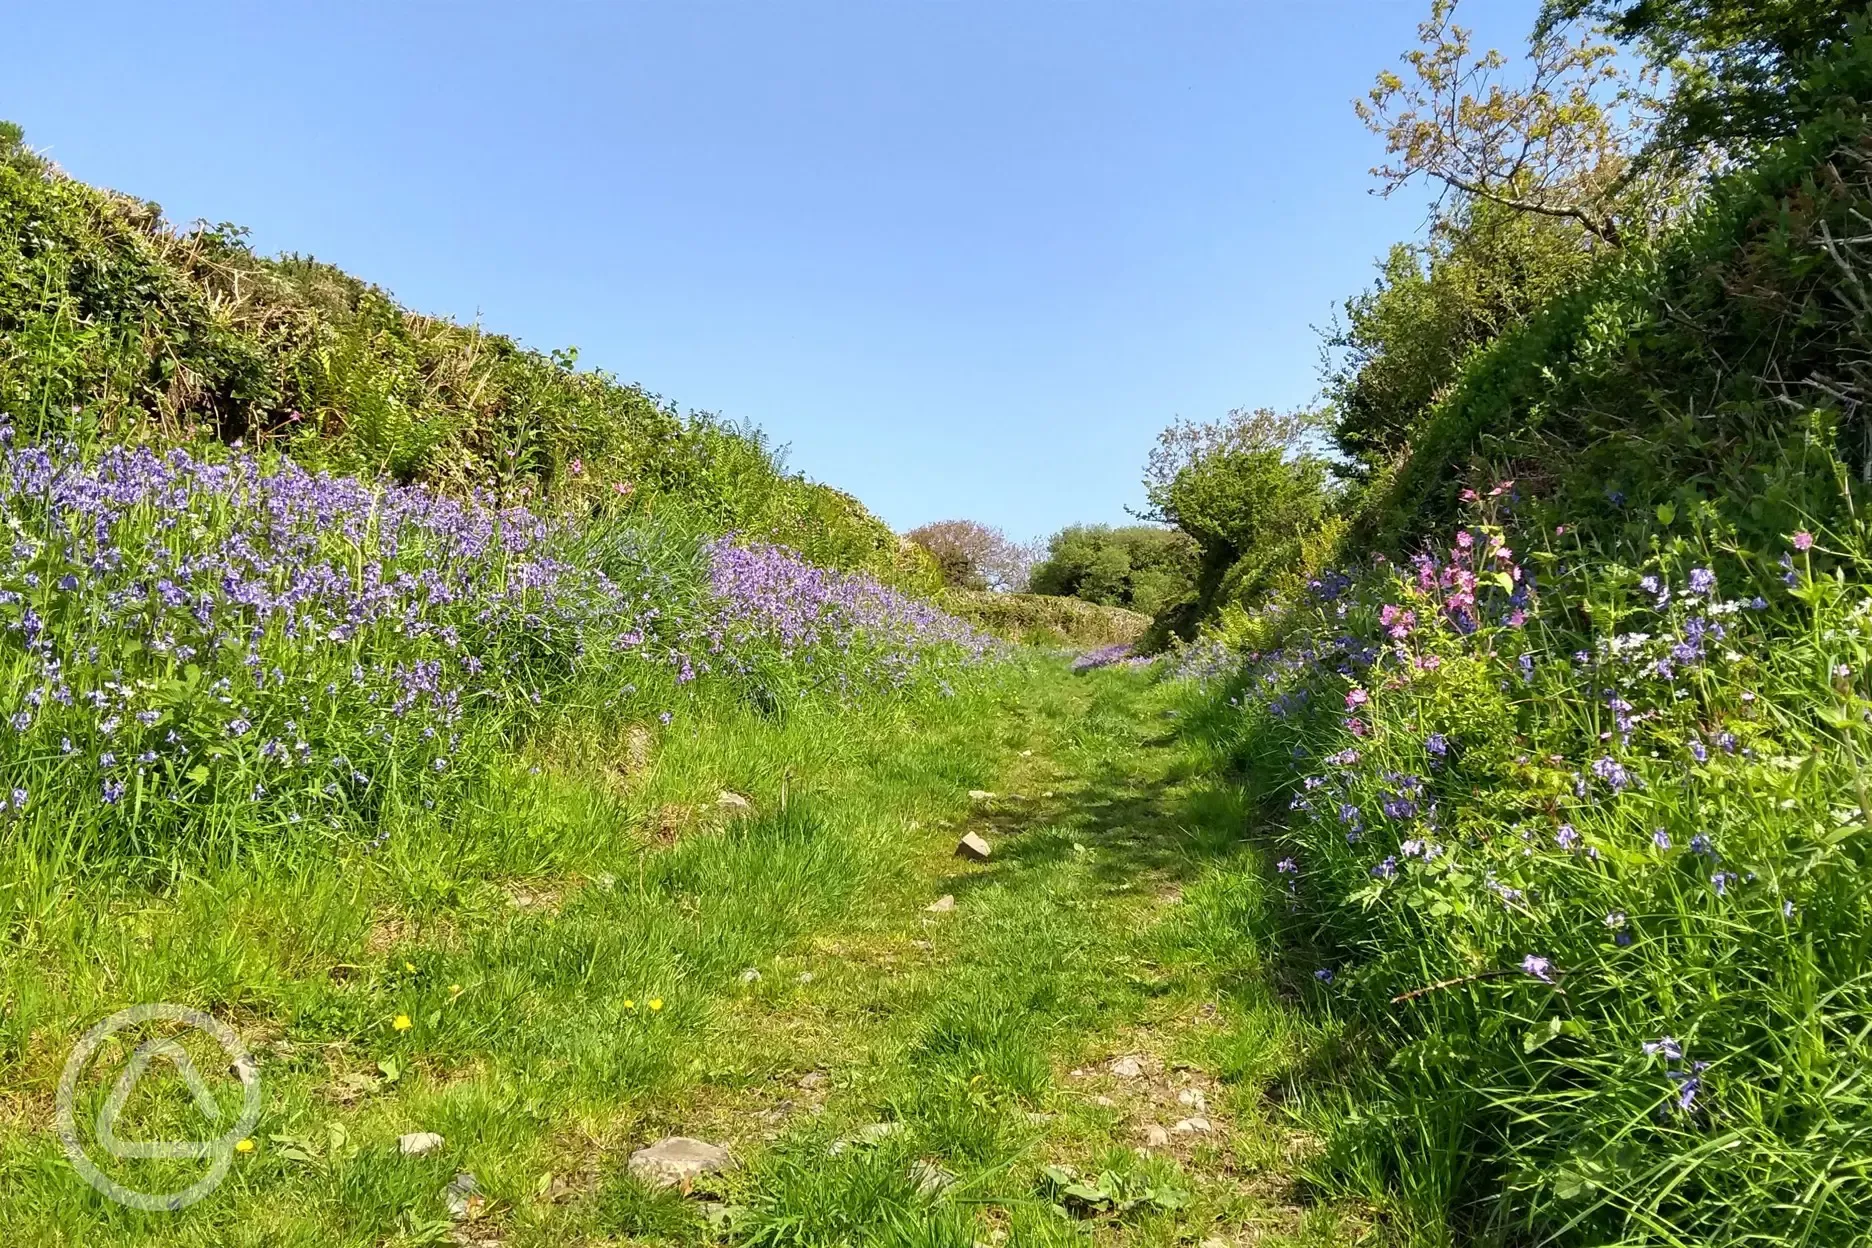 Nearby Dartmoor walks